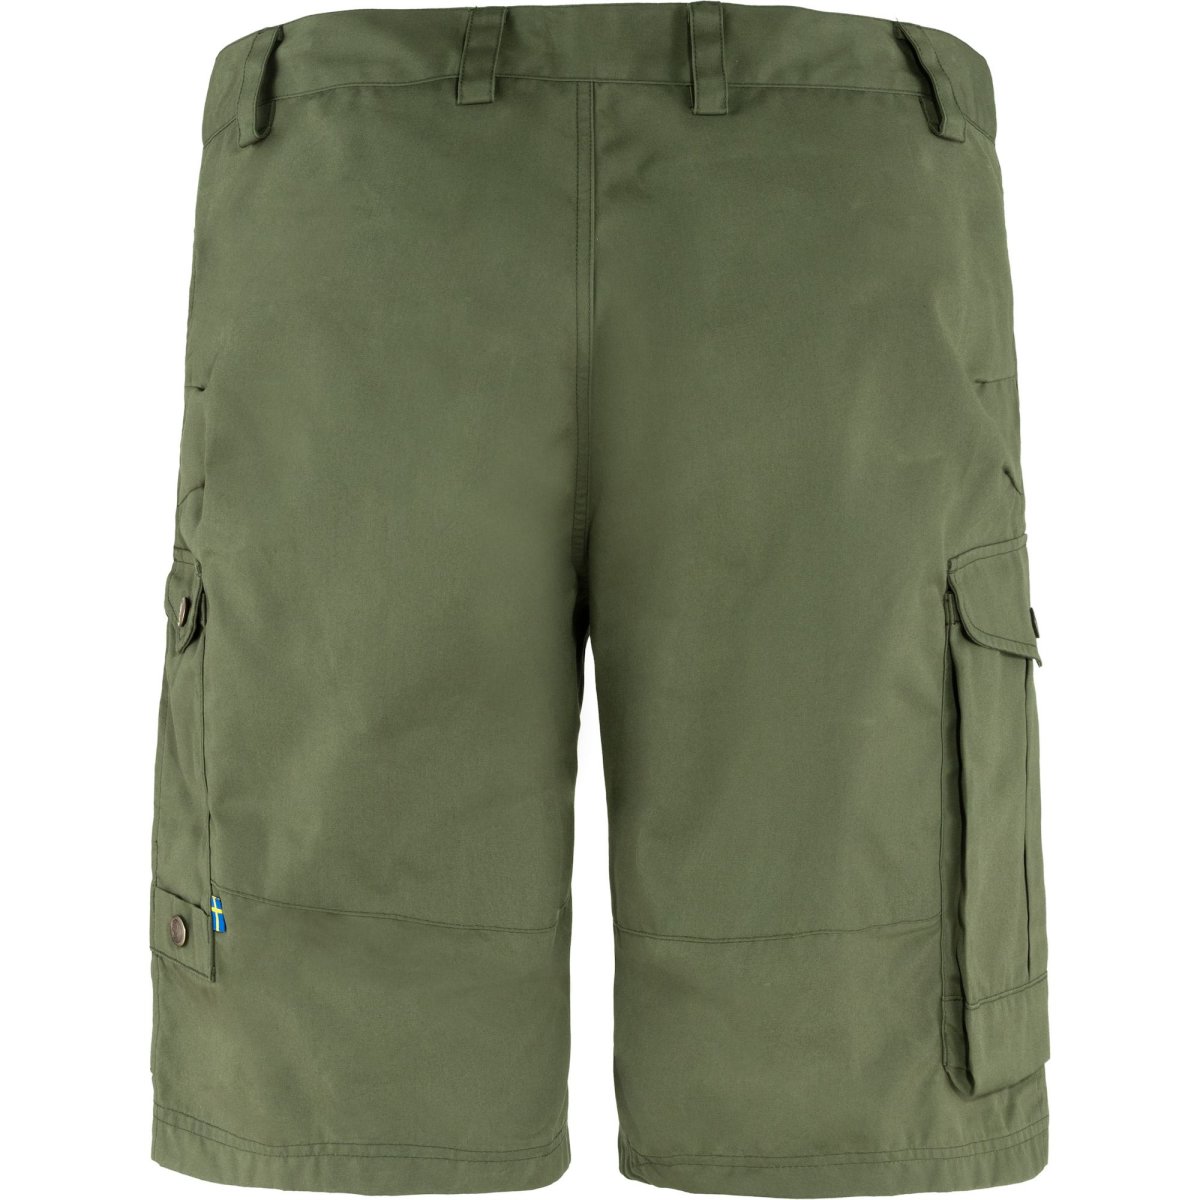 Fj&auml;llr&auml;ven Barents Pro Shorts 82467 laurel green G-1000&reg; Shorts Trekking Outdoor